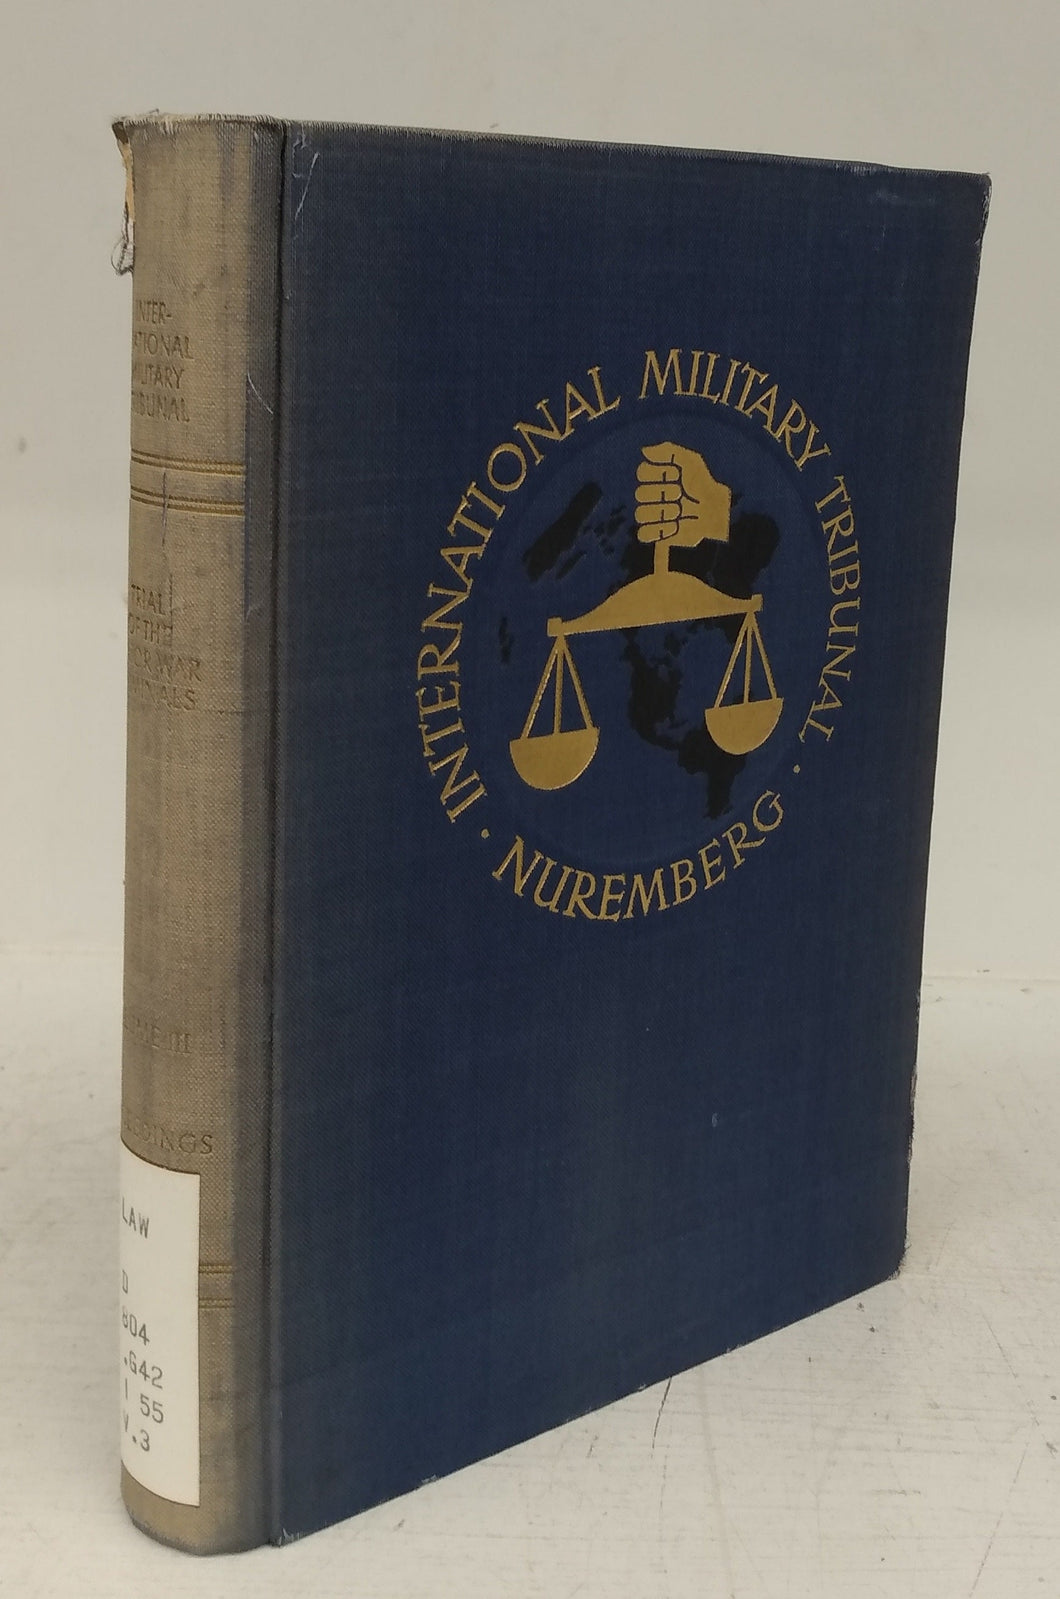 Trial of the Major War Criminals before the International Military Tribunal, Nuremberg, 14 November 1945 - 1 October 1946 (Volume III)